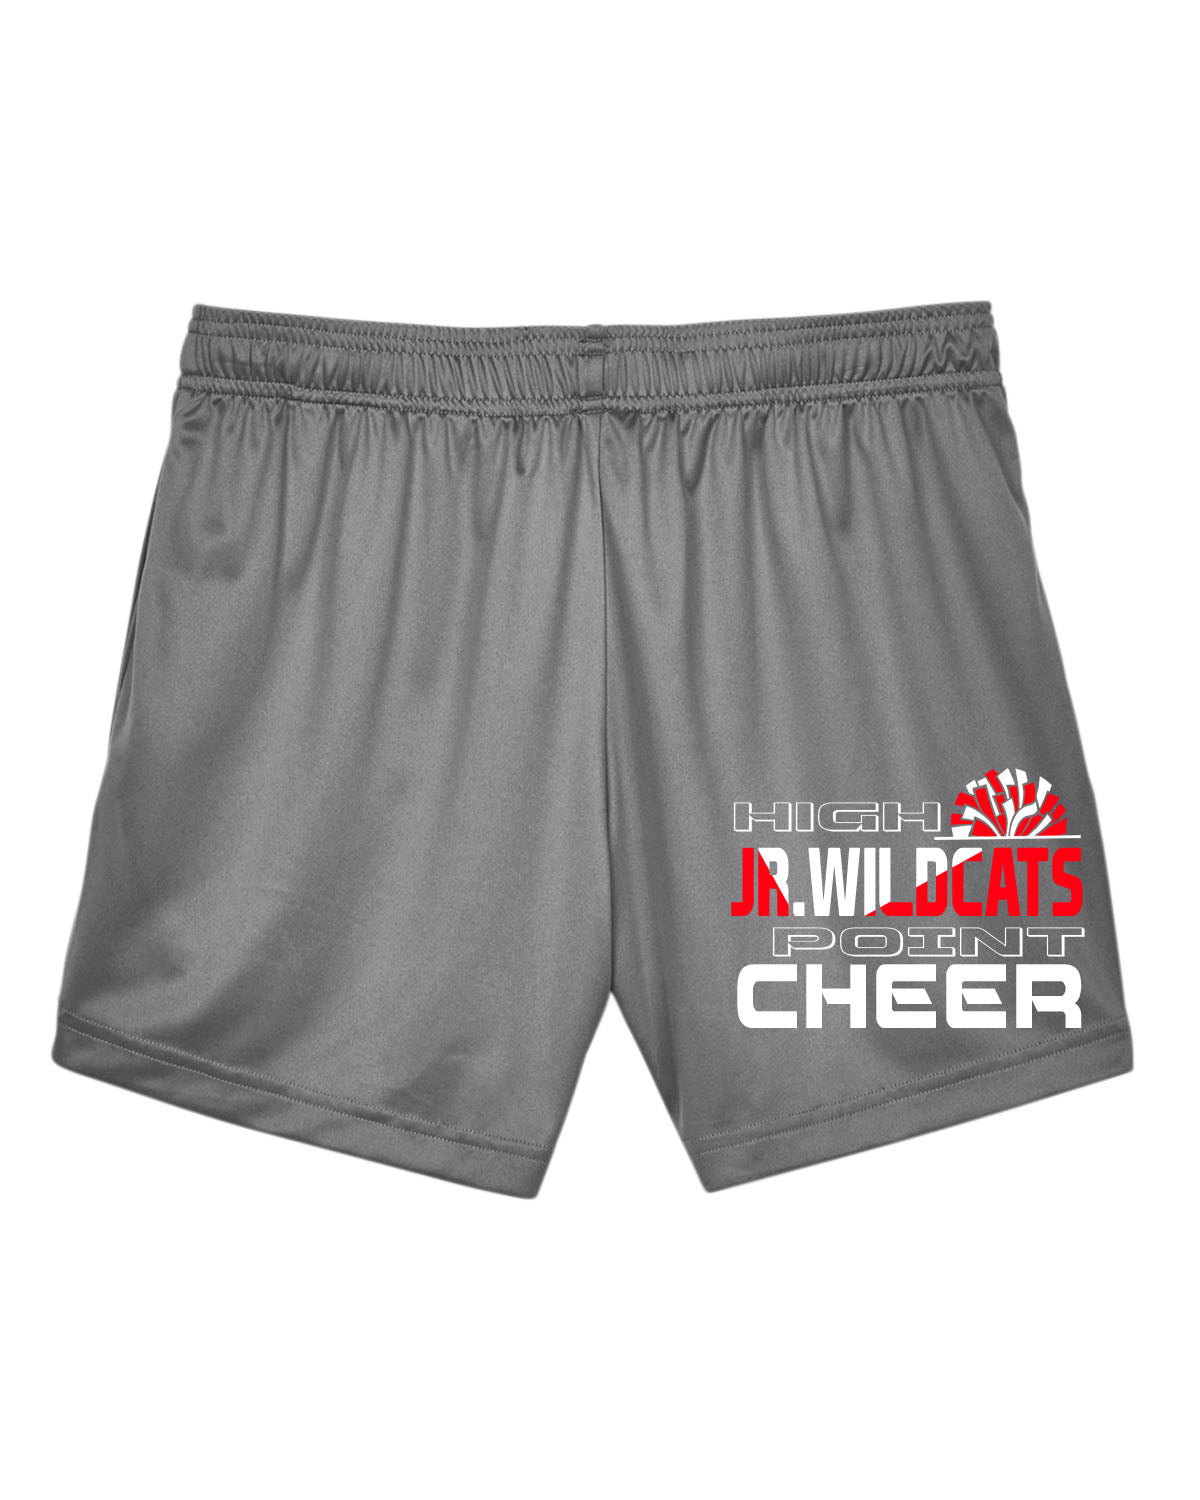 High Point Cheer Ladies Performance Design 5 Shorts